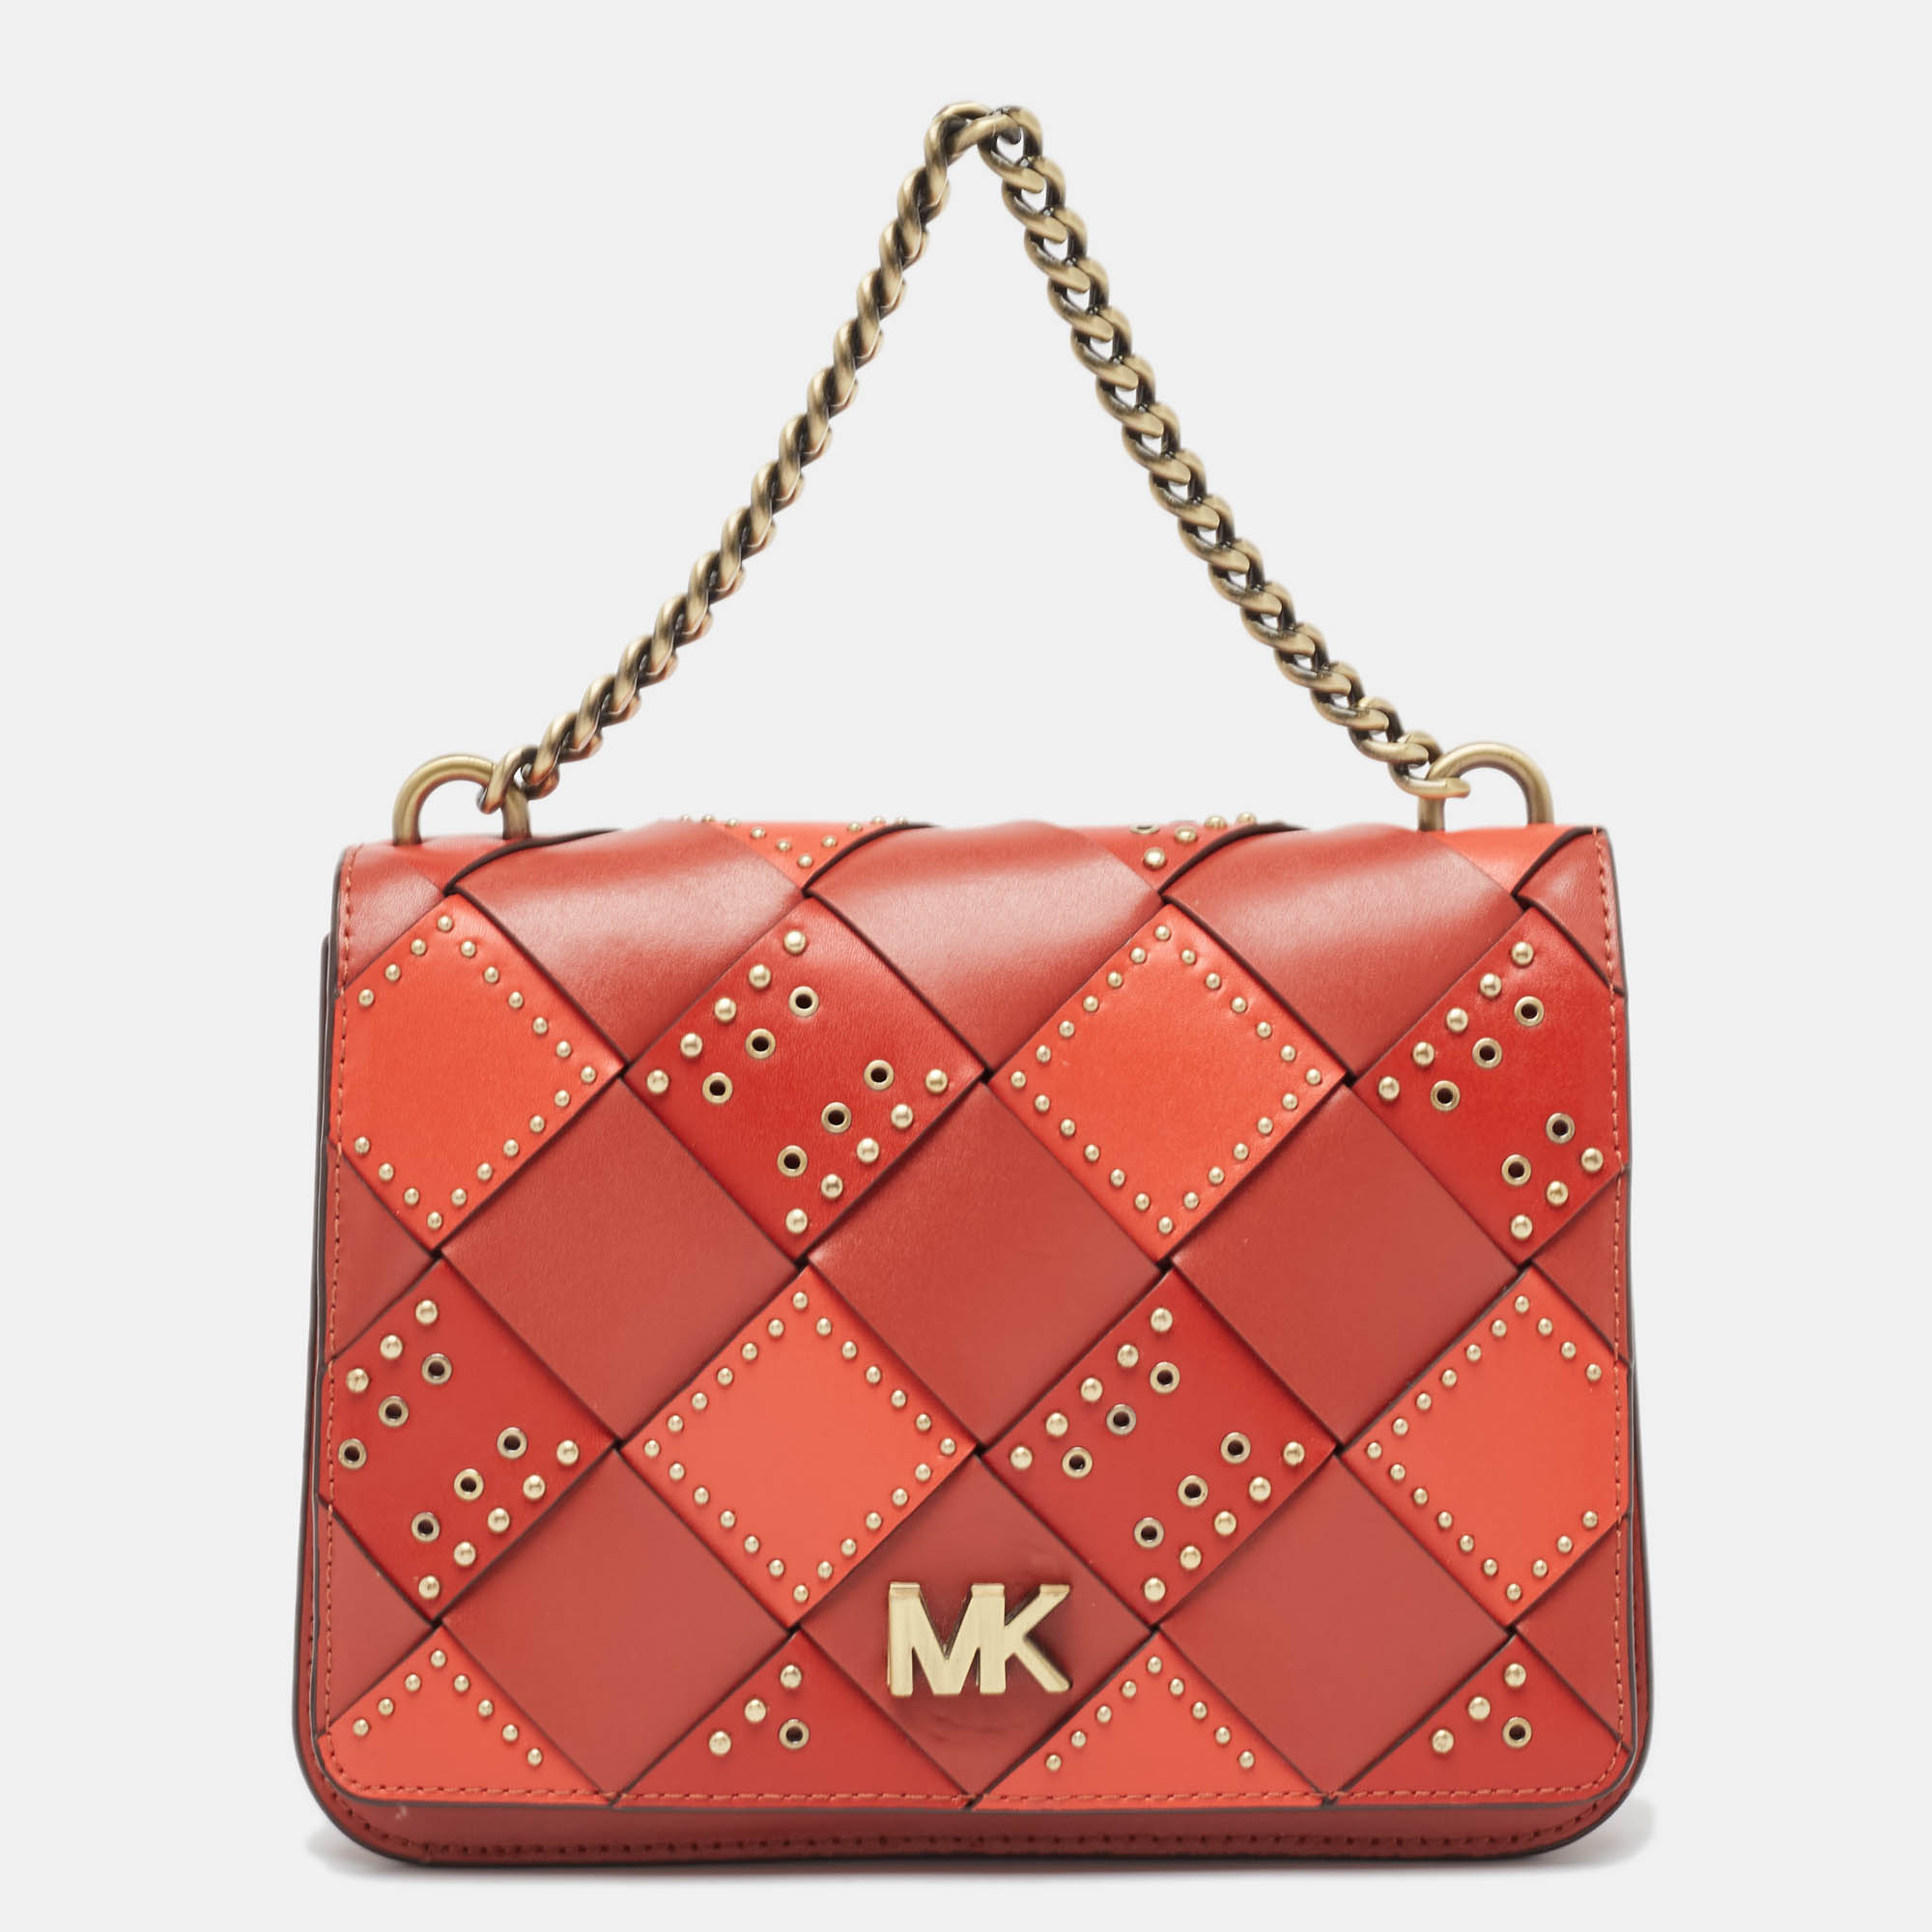 Michael kors red woven leather studded mott top handle bag